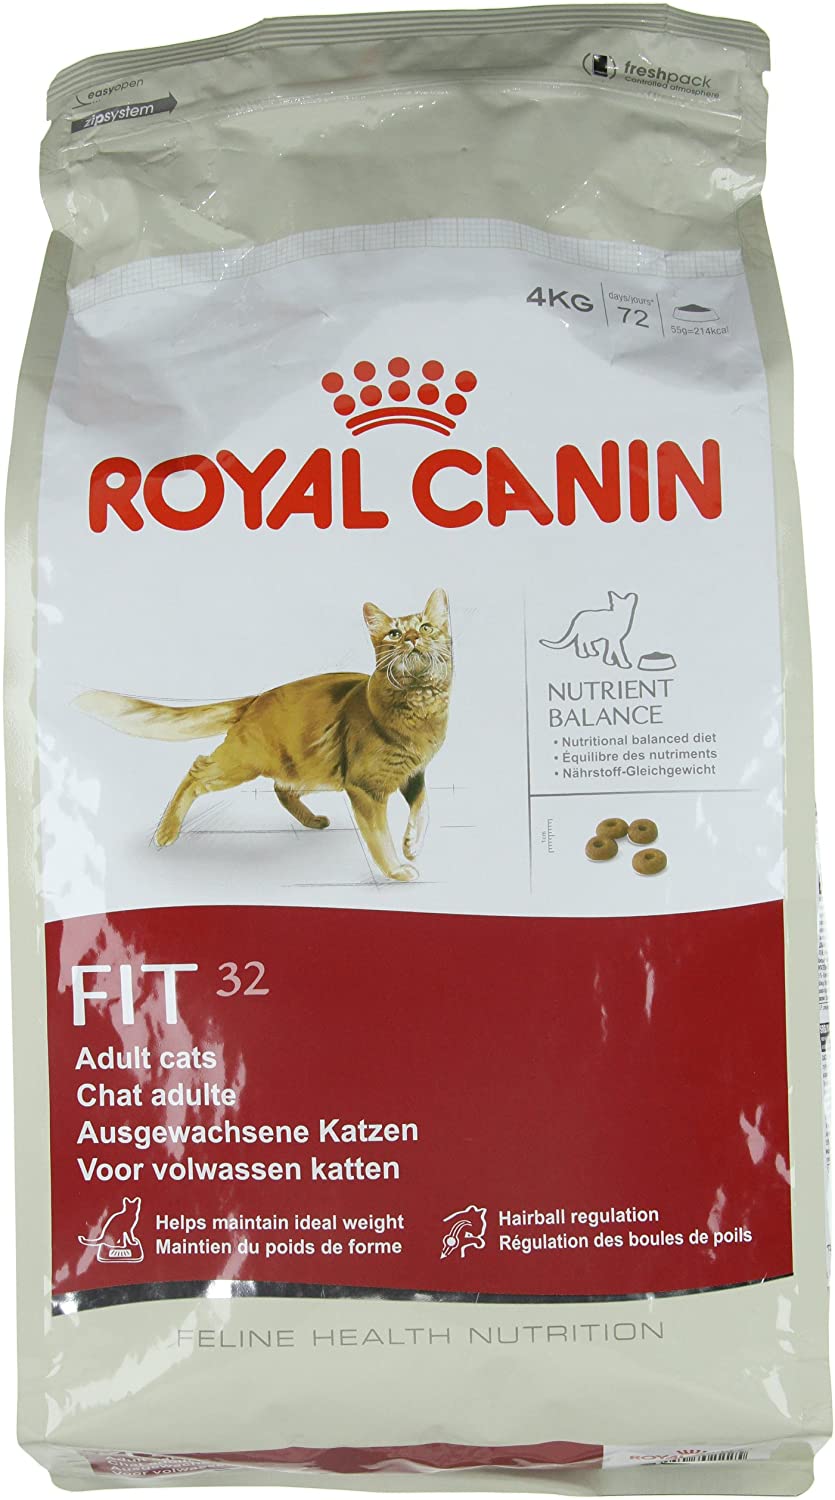  Royal Canin C-58522 Fit - 4 Kg 